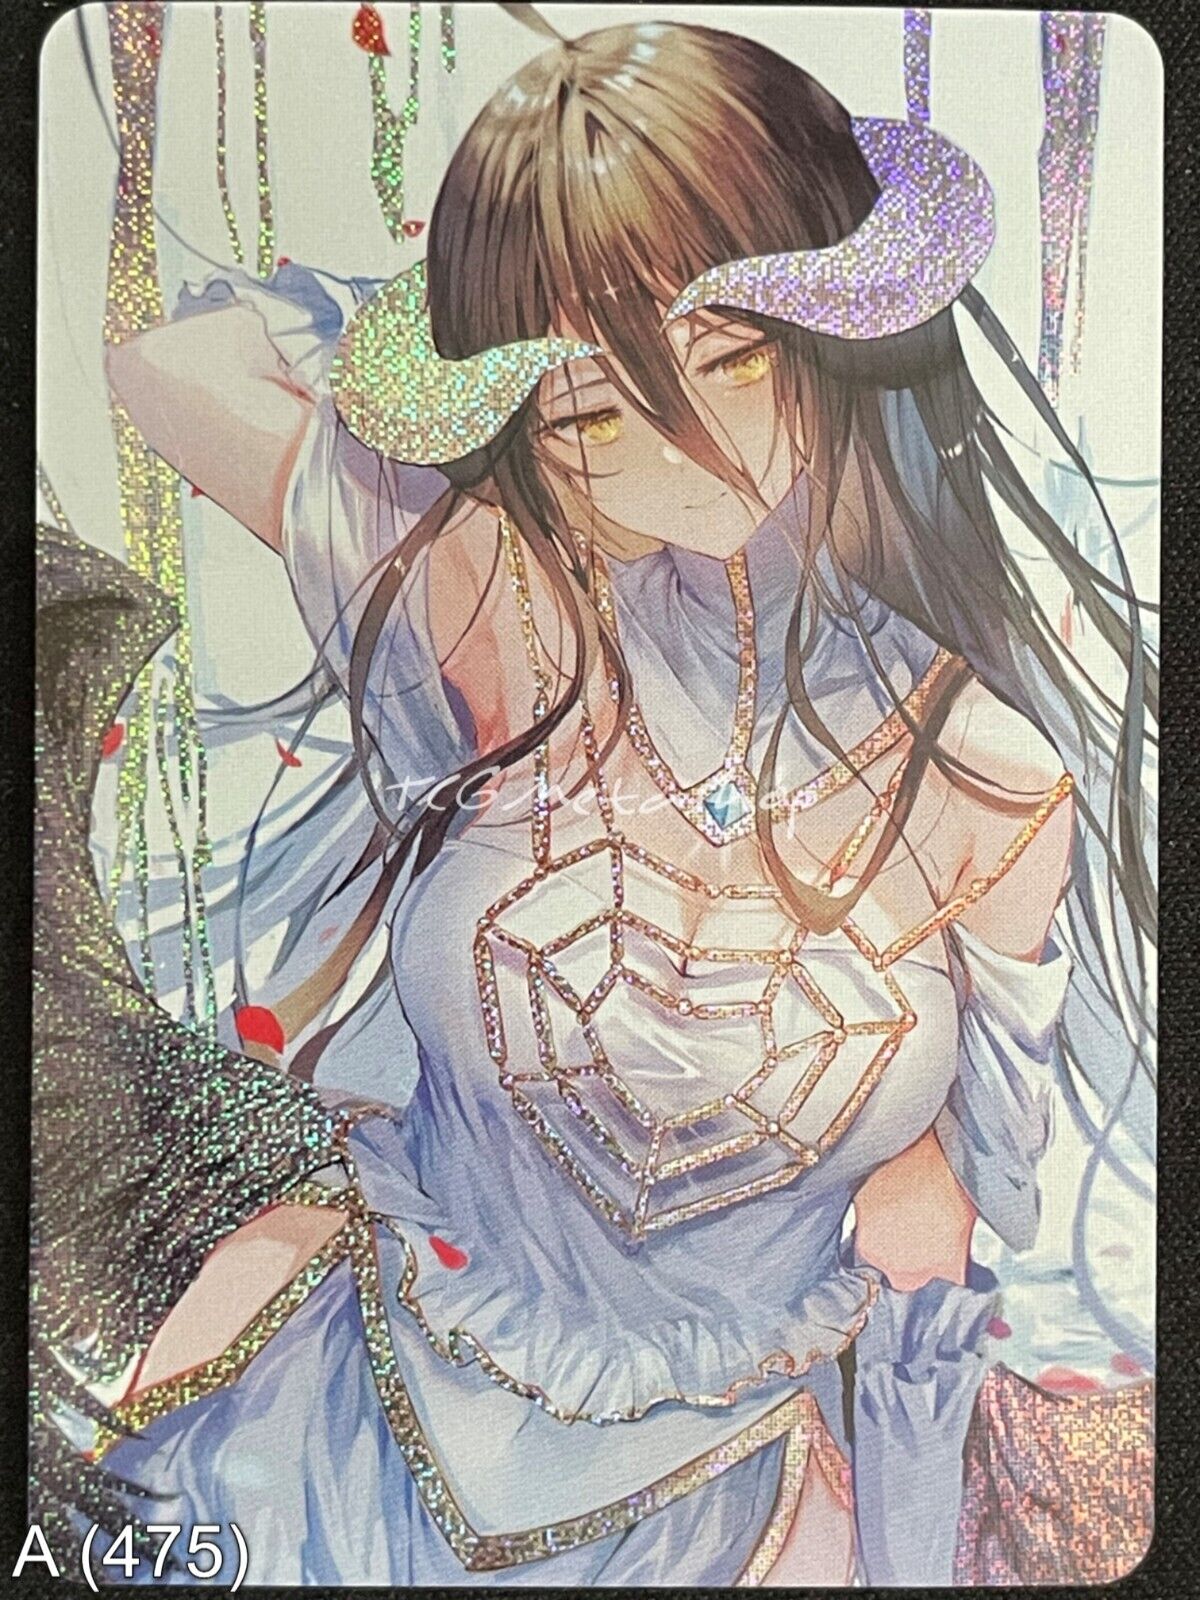 🔥 A 475 Albedo Overlord Goddess Story Anime Waifu Card ACG 🔥